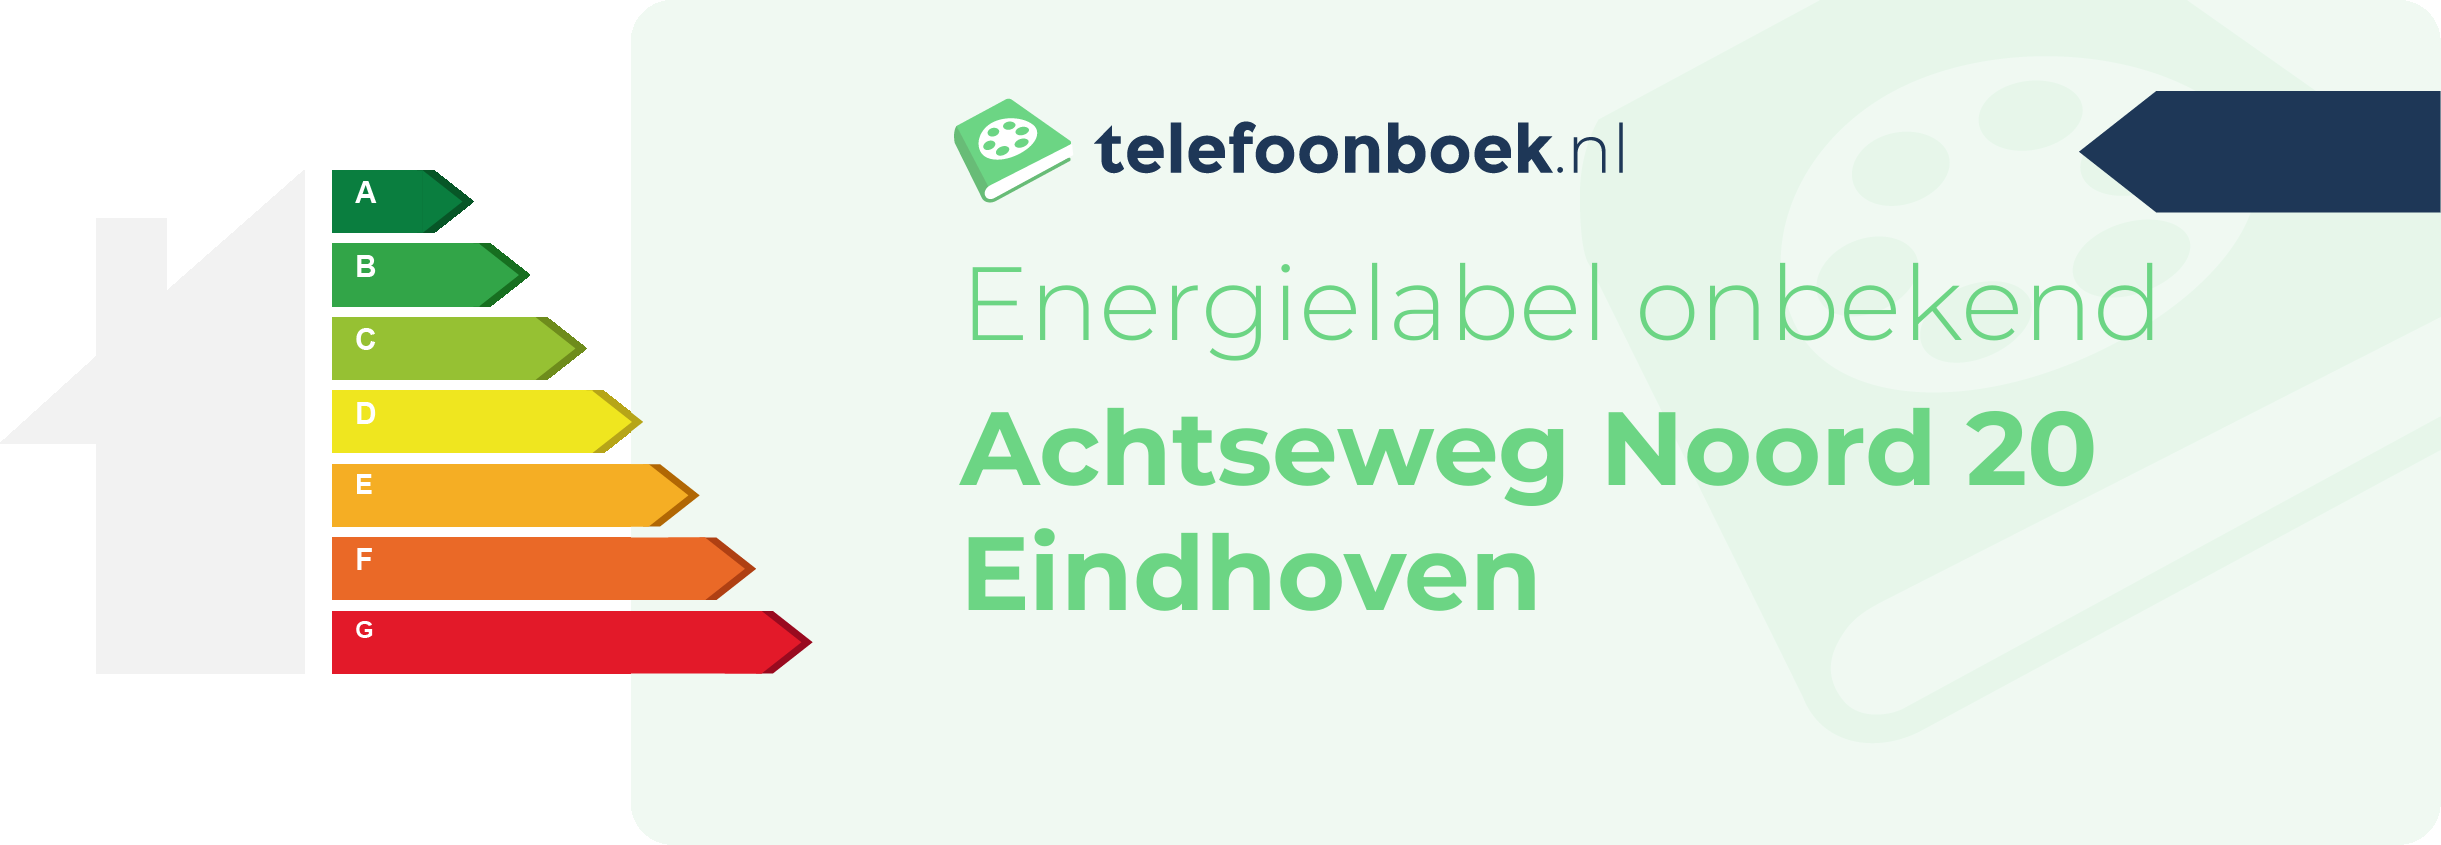 Energielabel Achtseweg Noord 20 Eindhoven